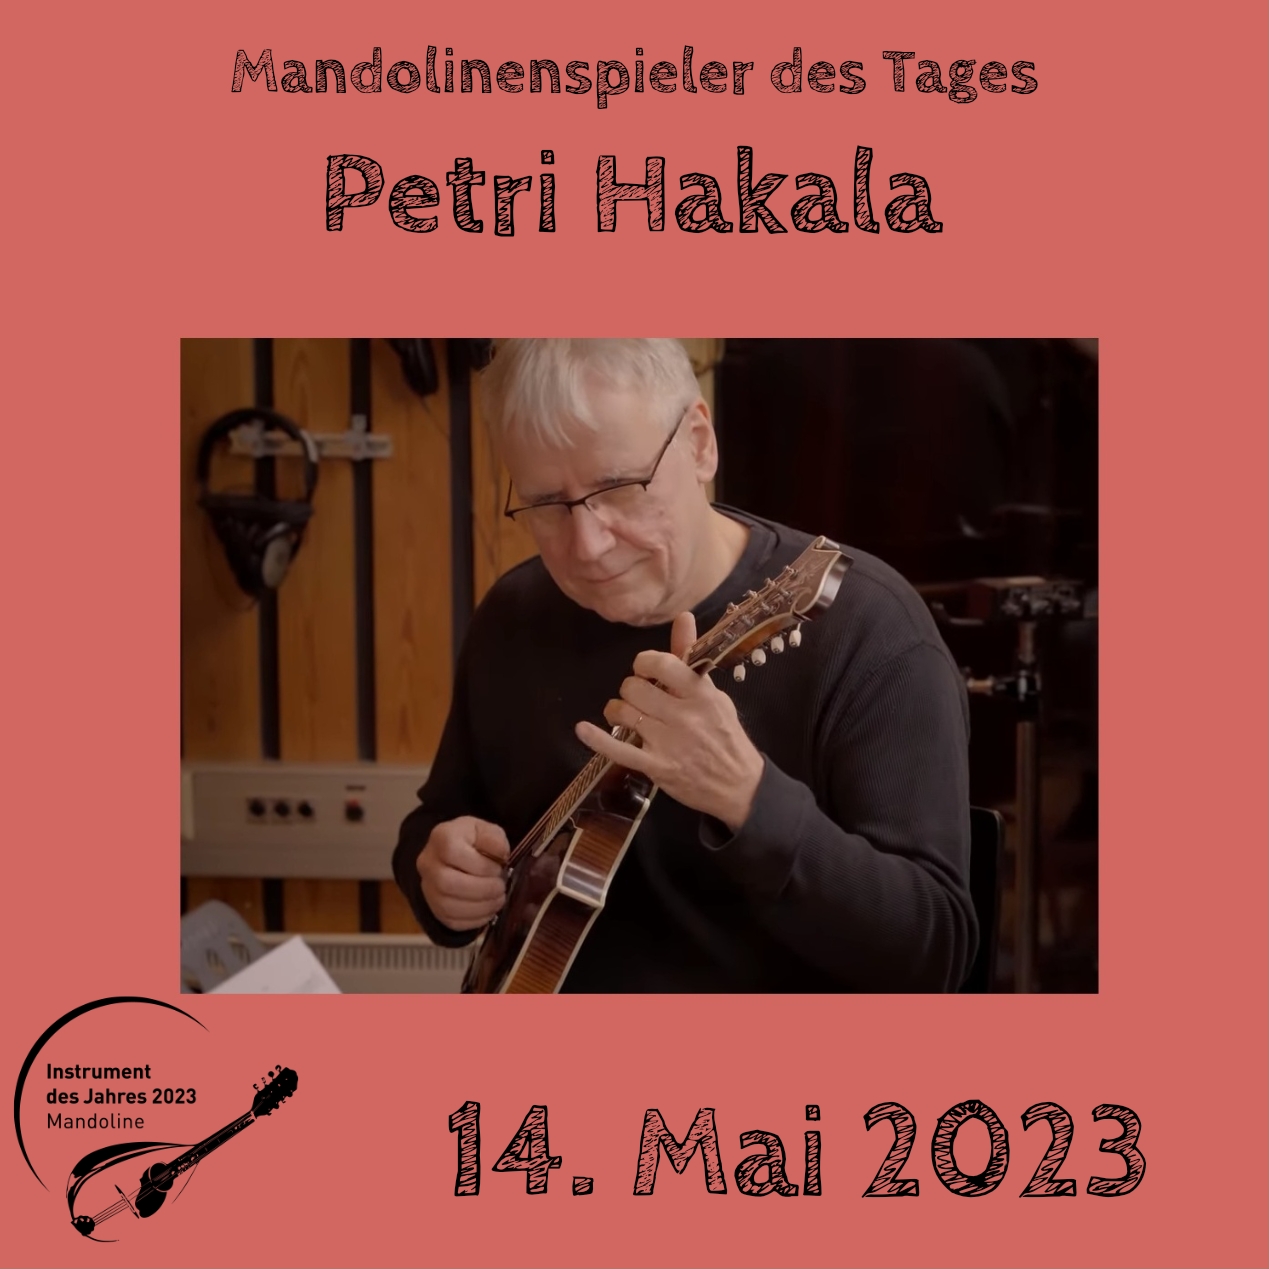 Petri Hakala Mandoline Instrument des Jahres 2023 Mandolinenspieler Mandolinenspielerin des Tages